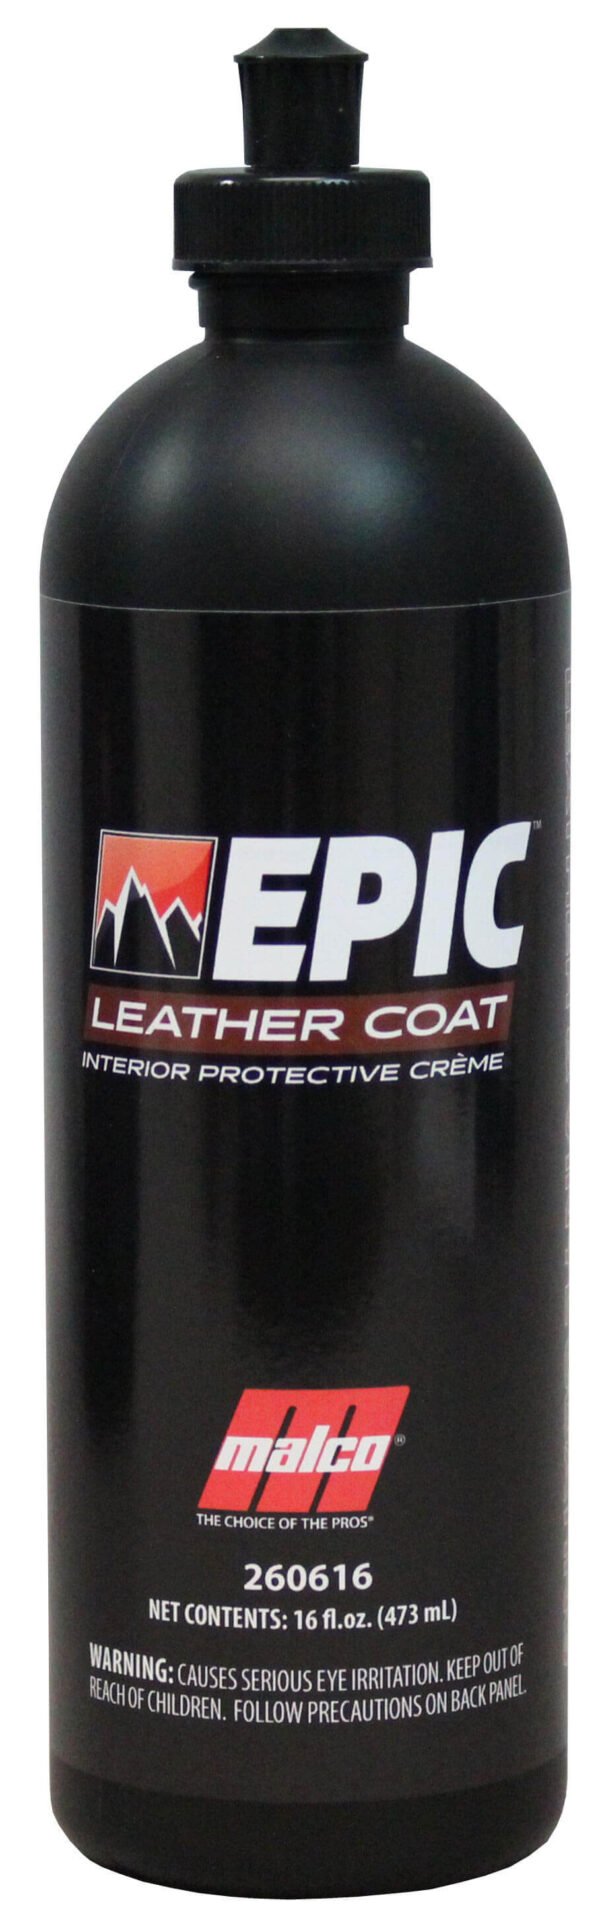 epic-leather-coat-1